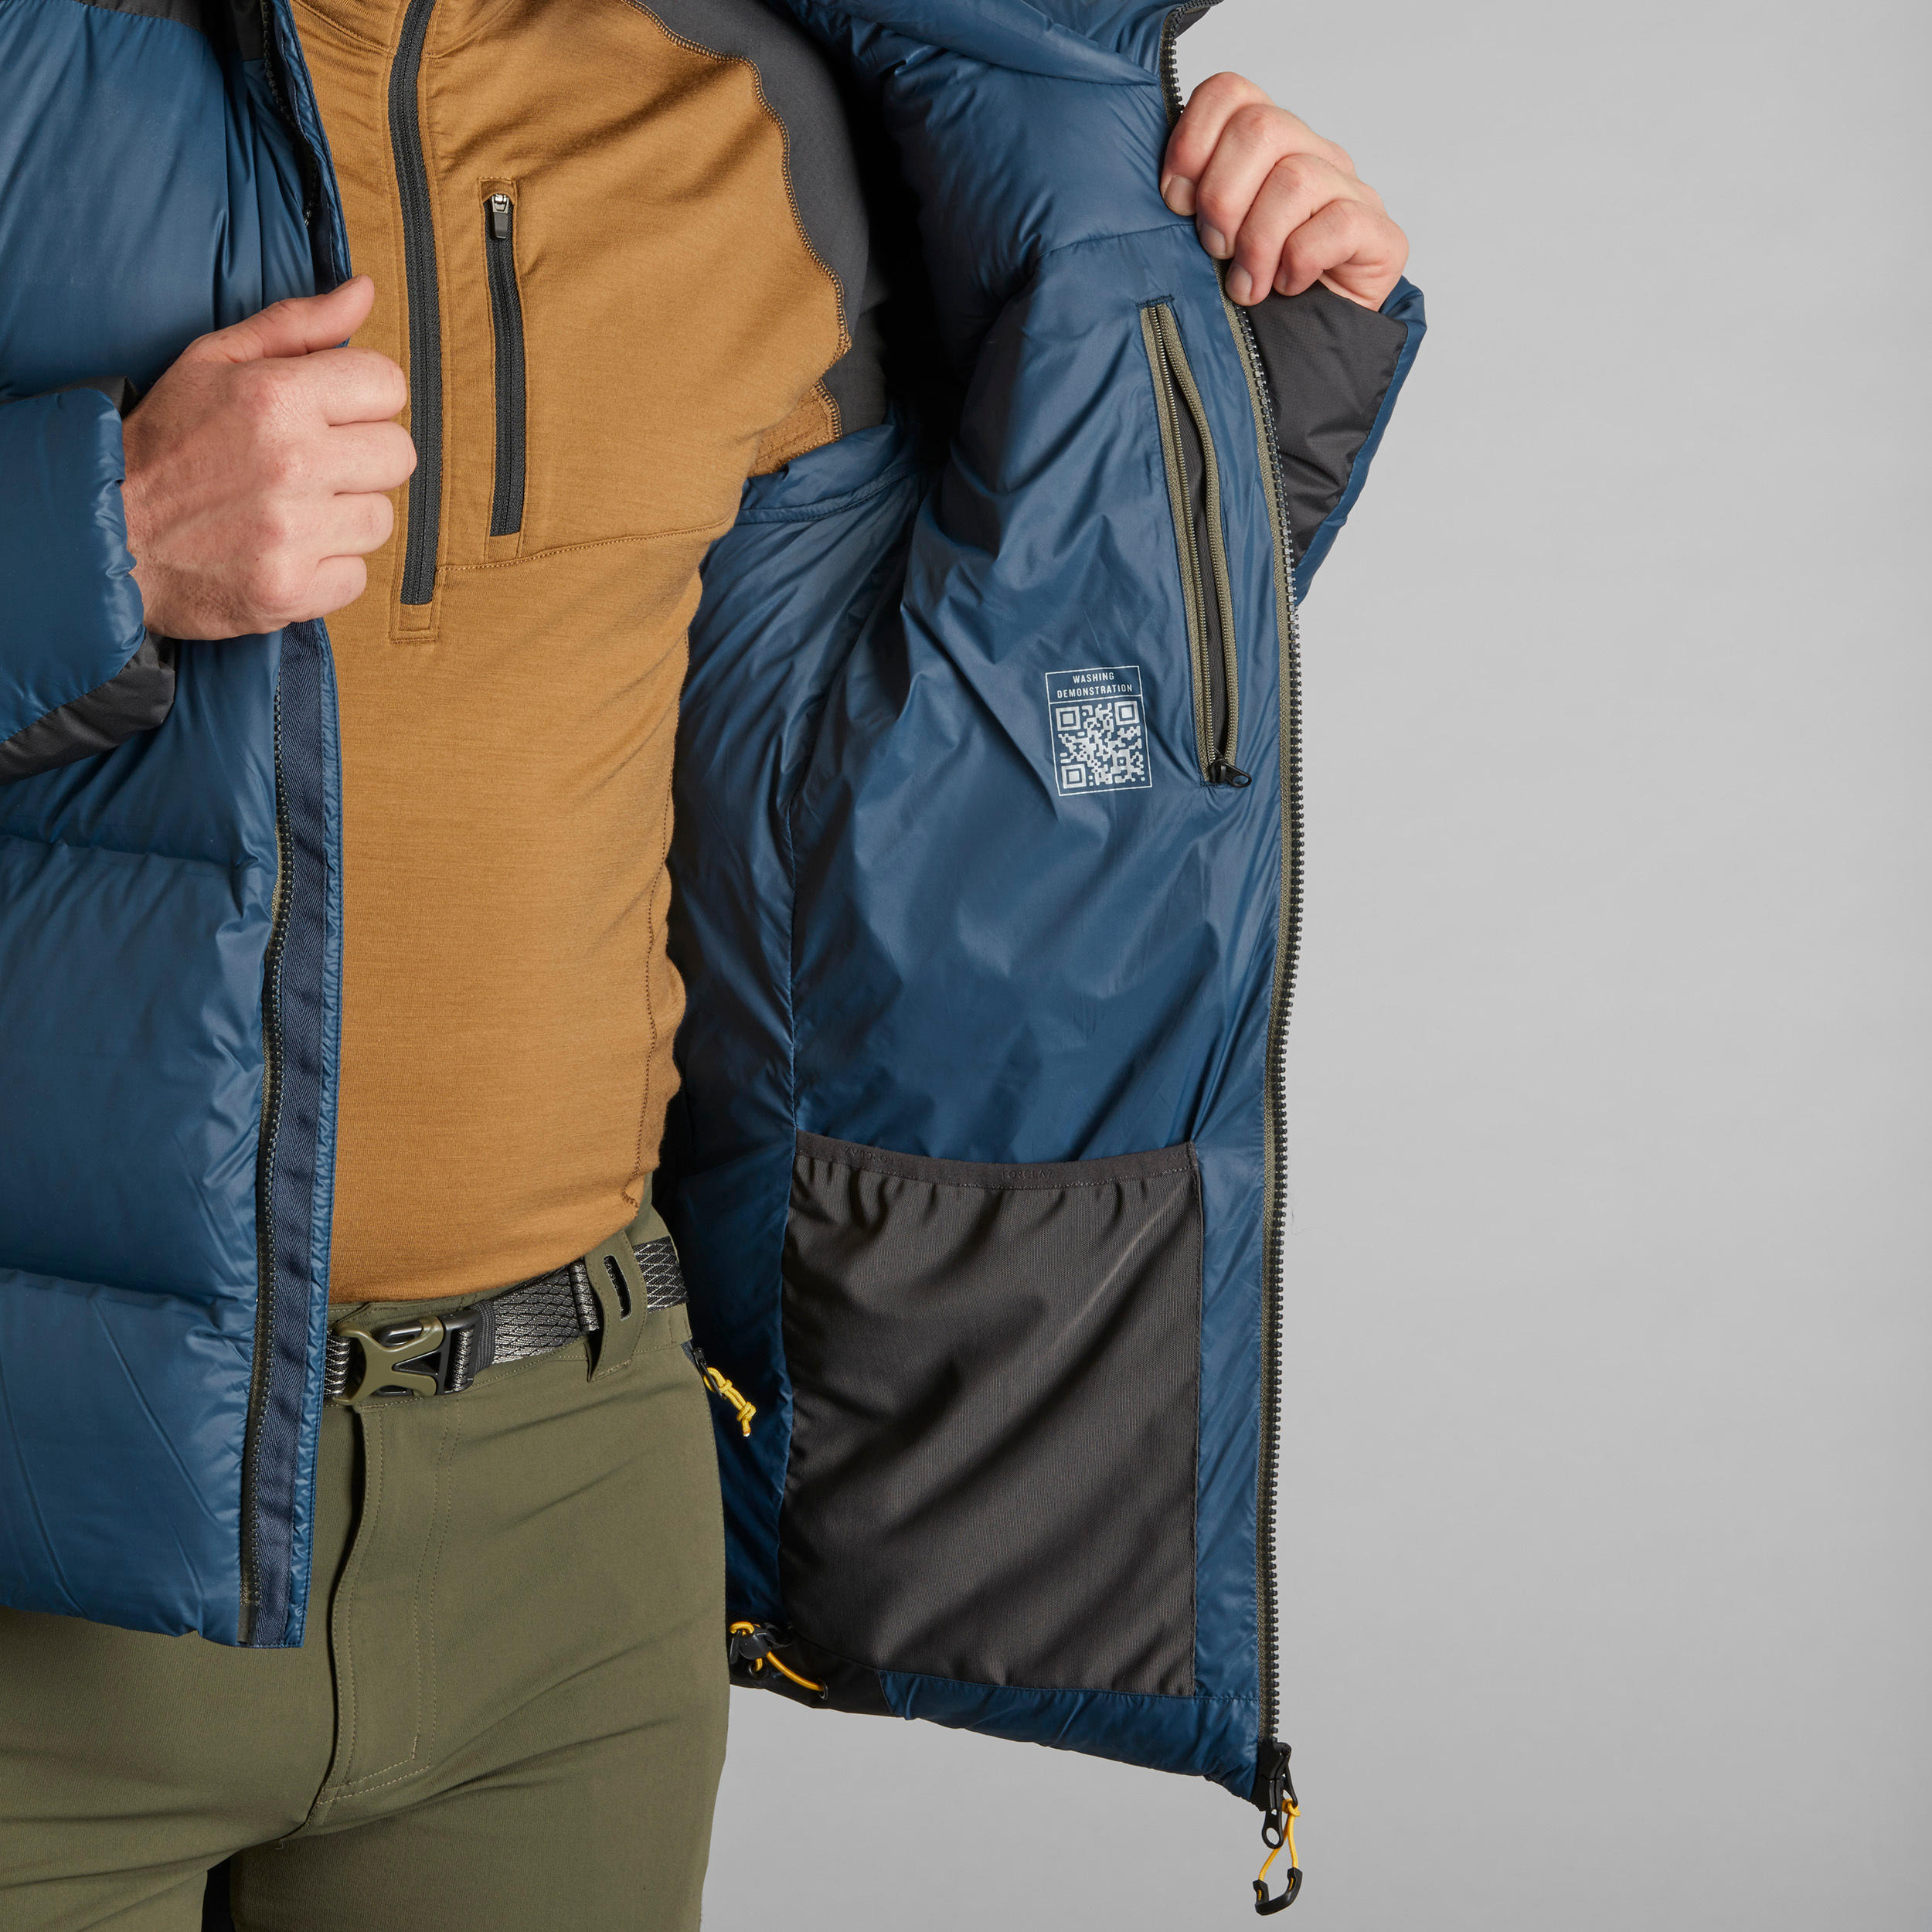 Quechua Jacket , Decathlon down Jacket , Trekking down Jacket - Best budget  winter jacket - YouTube